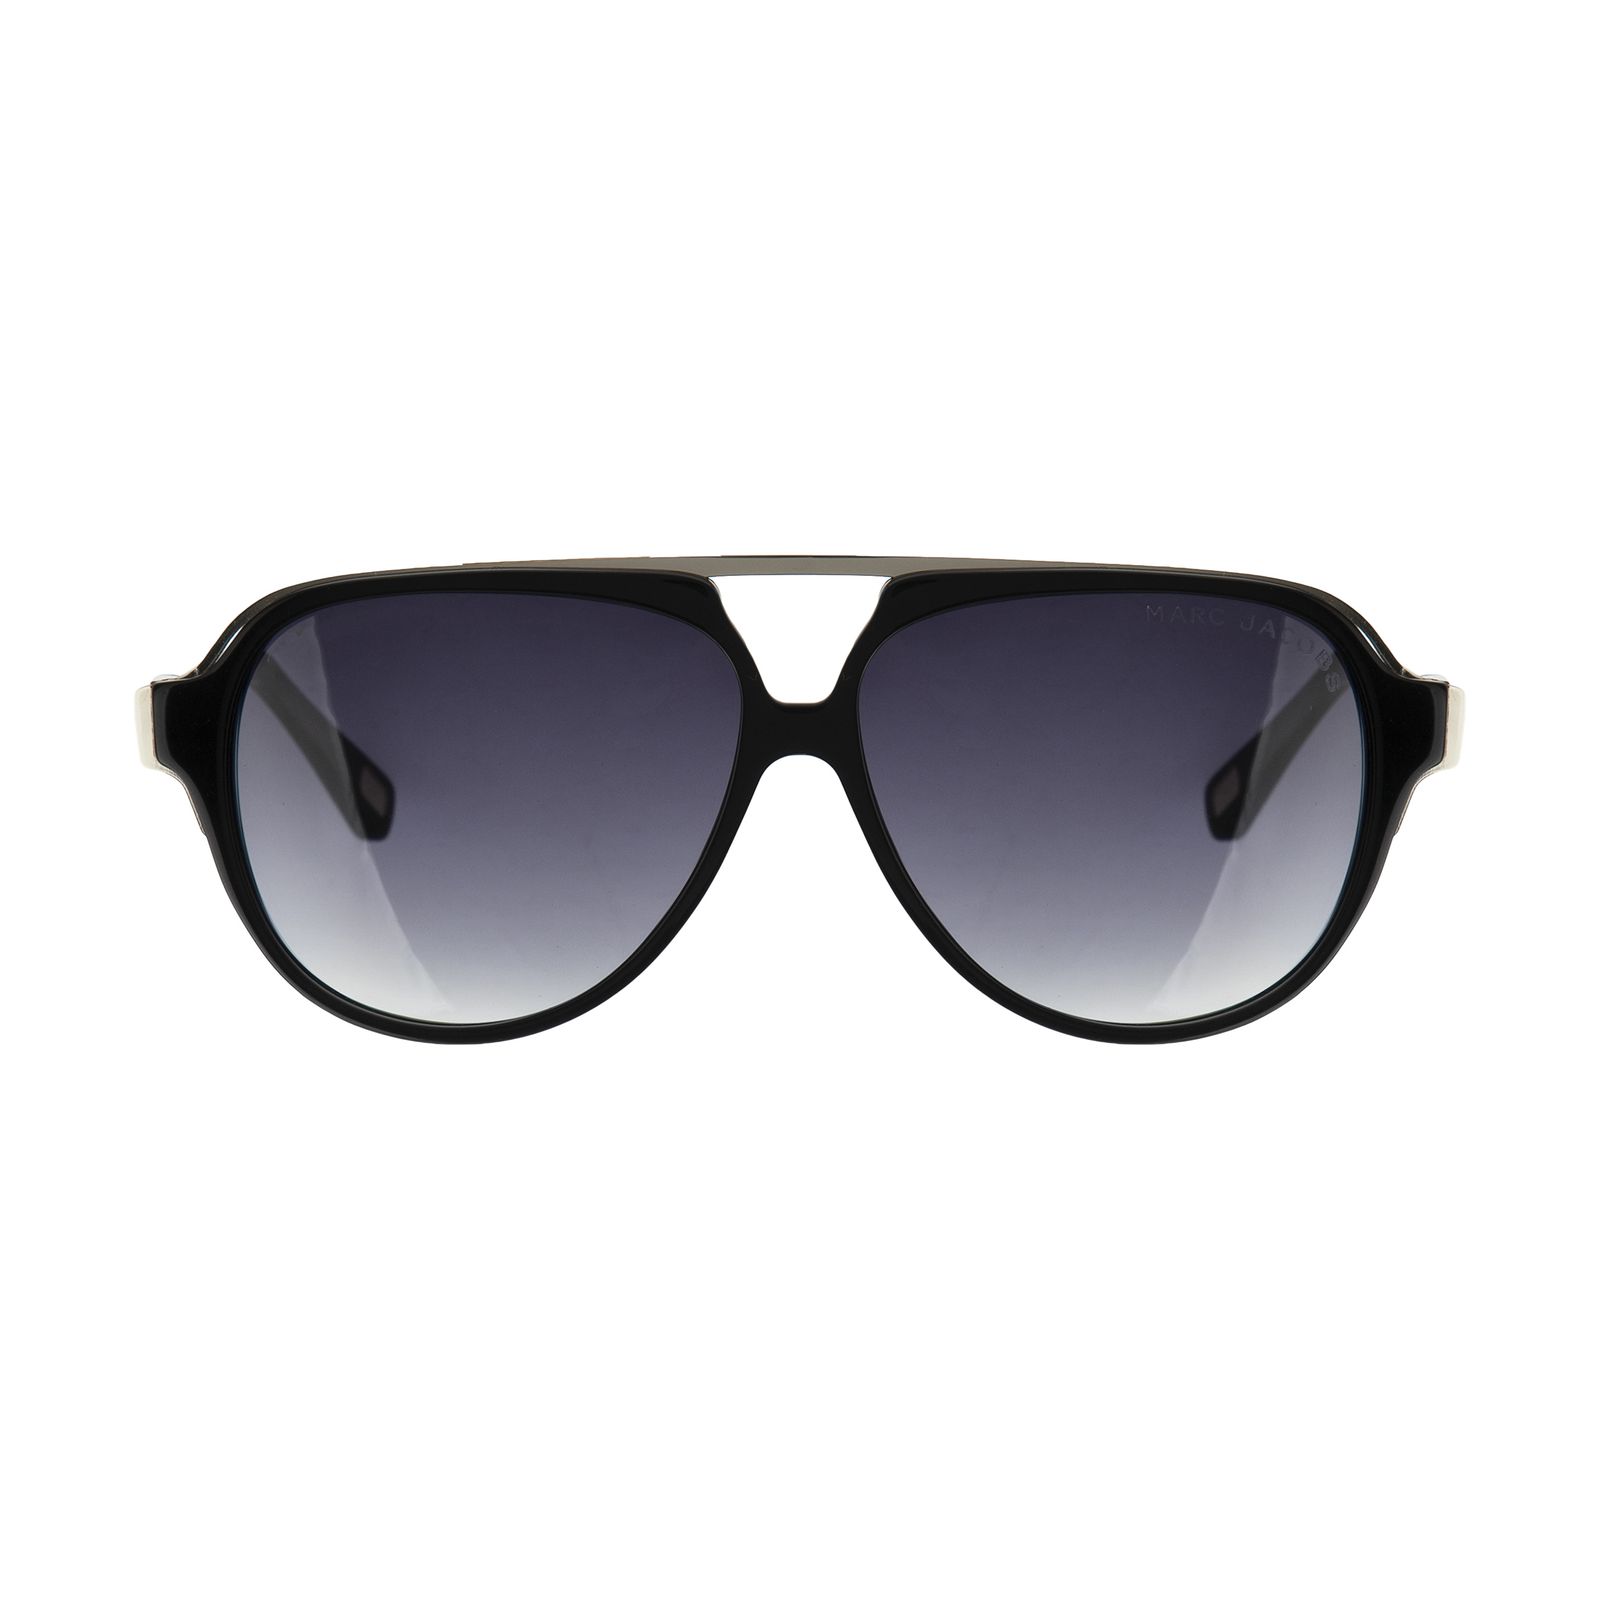  عینک آفتابی مارک جکوبس مدل 421  -  - 1